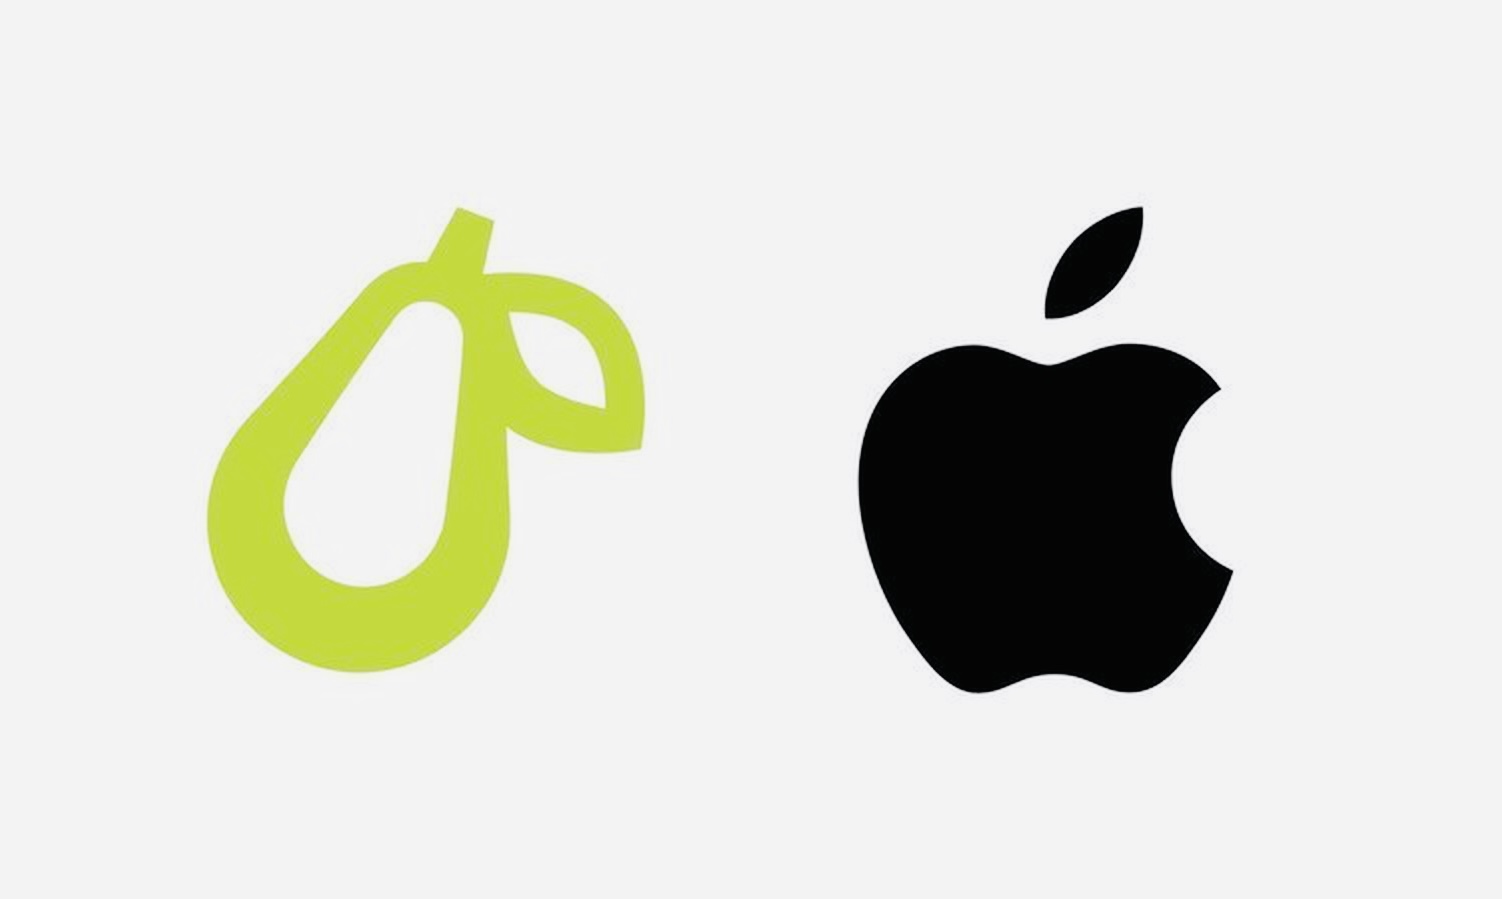 Apple и Prepear хотят договориться об использовании товарного знака груши. Он похож на логотип Apple